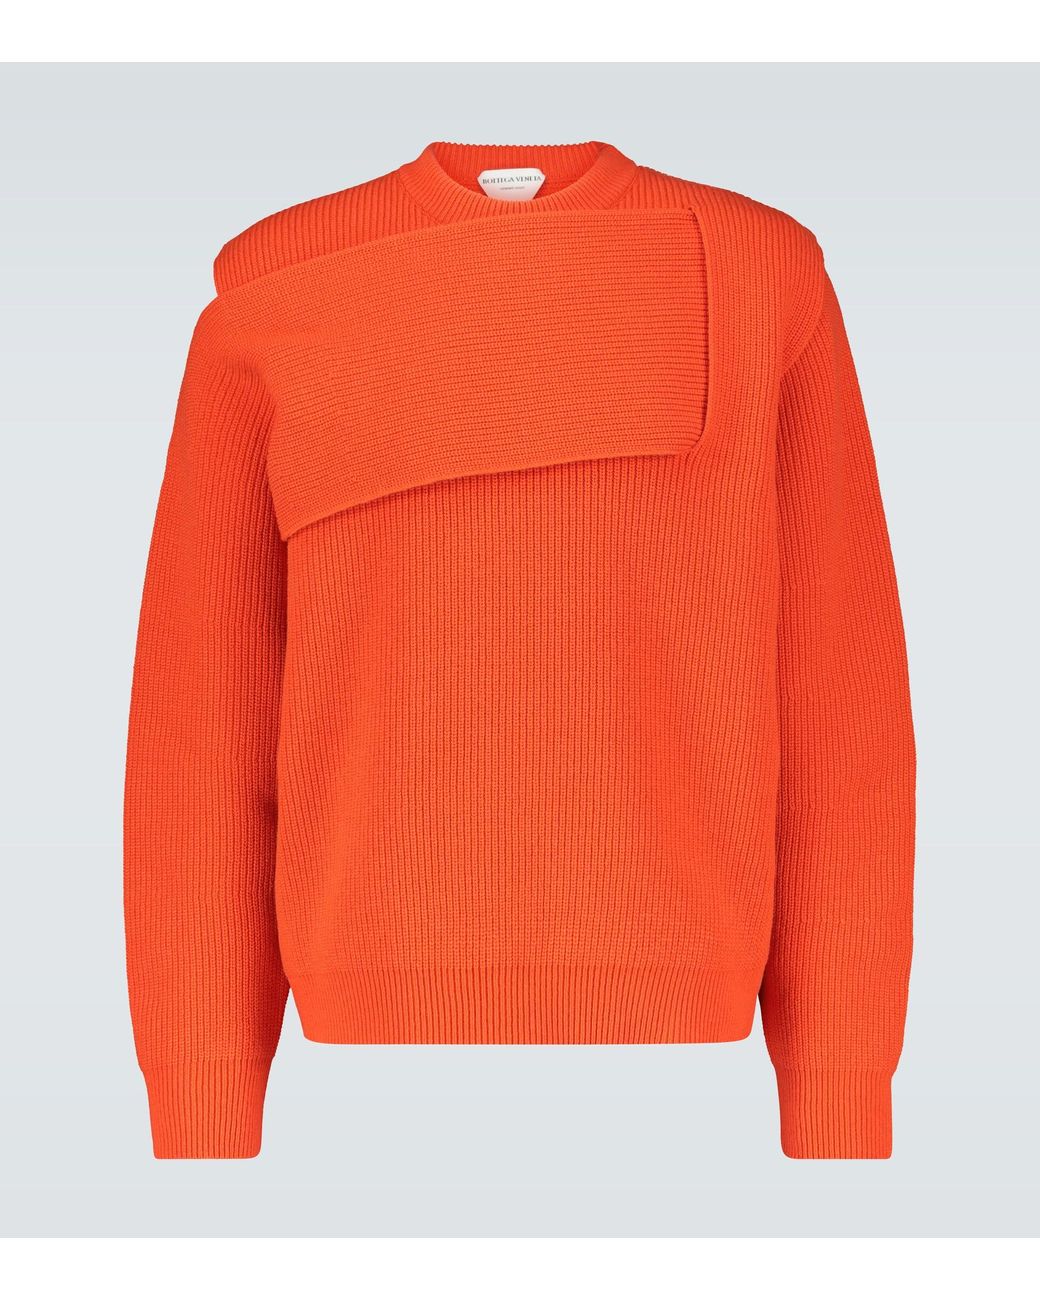 Bottega Veneta Deconstructed Knit Cashmere Sweater in Orange for